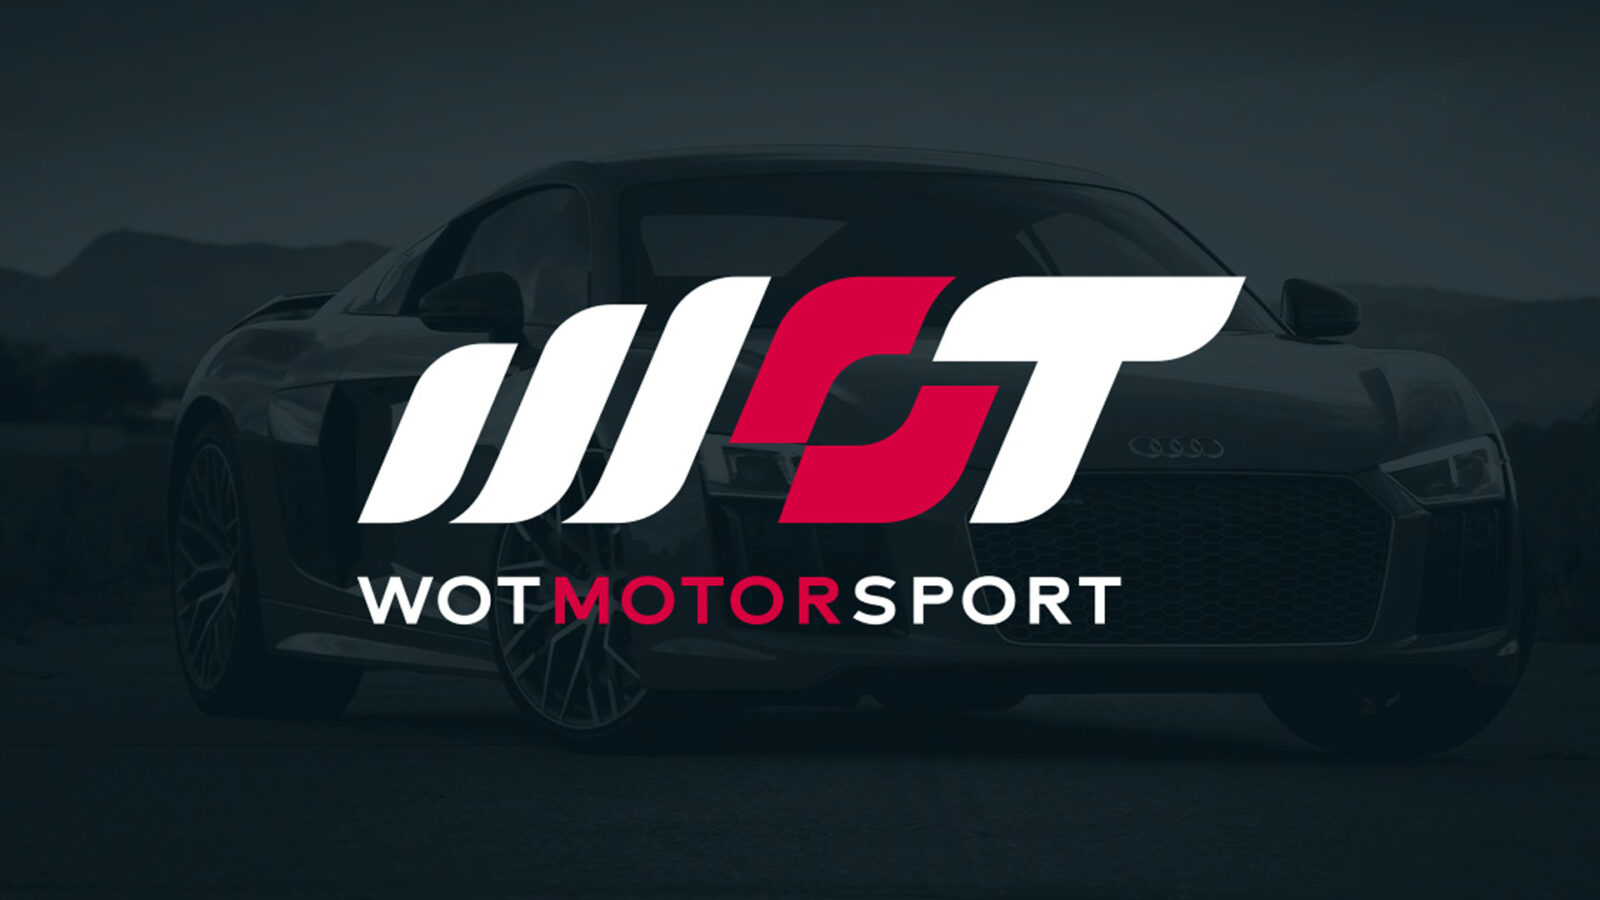 Wot Motorsport